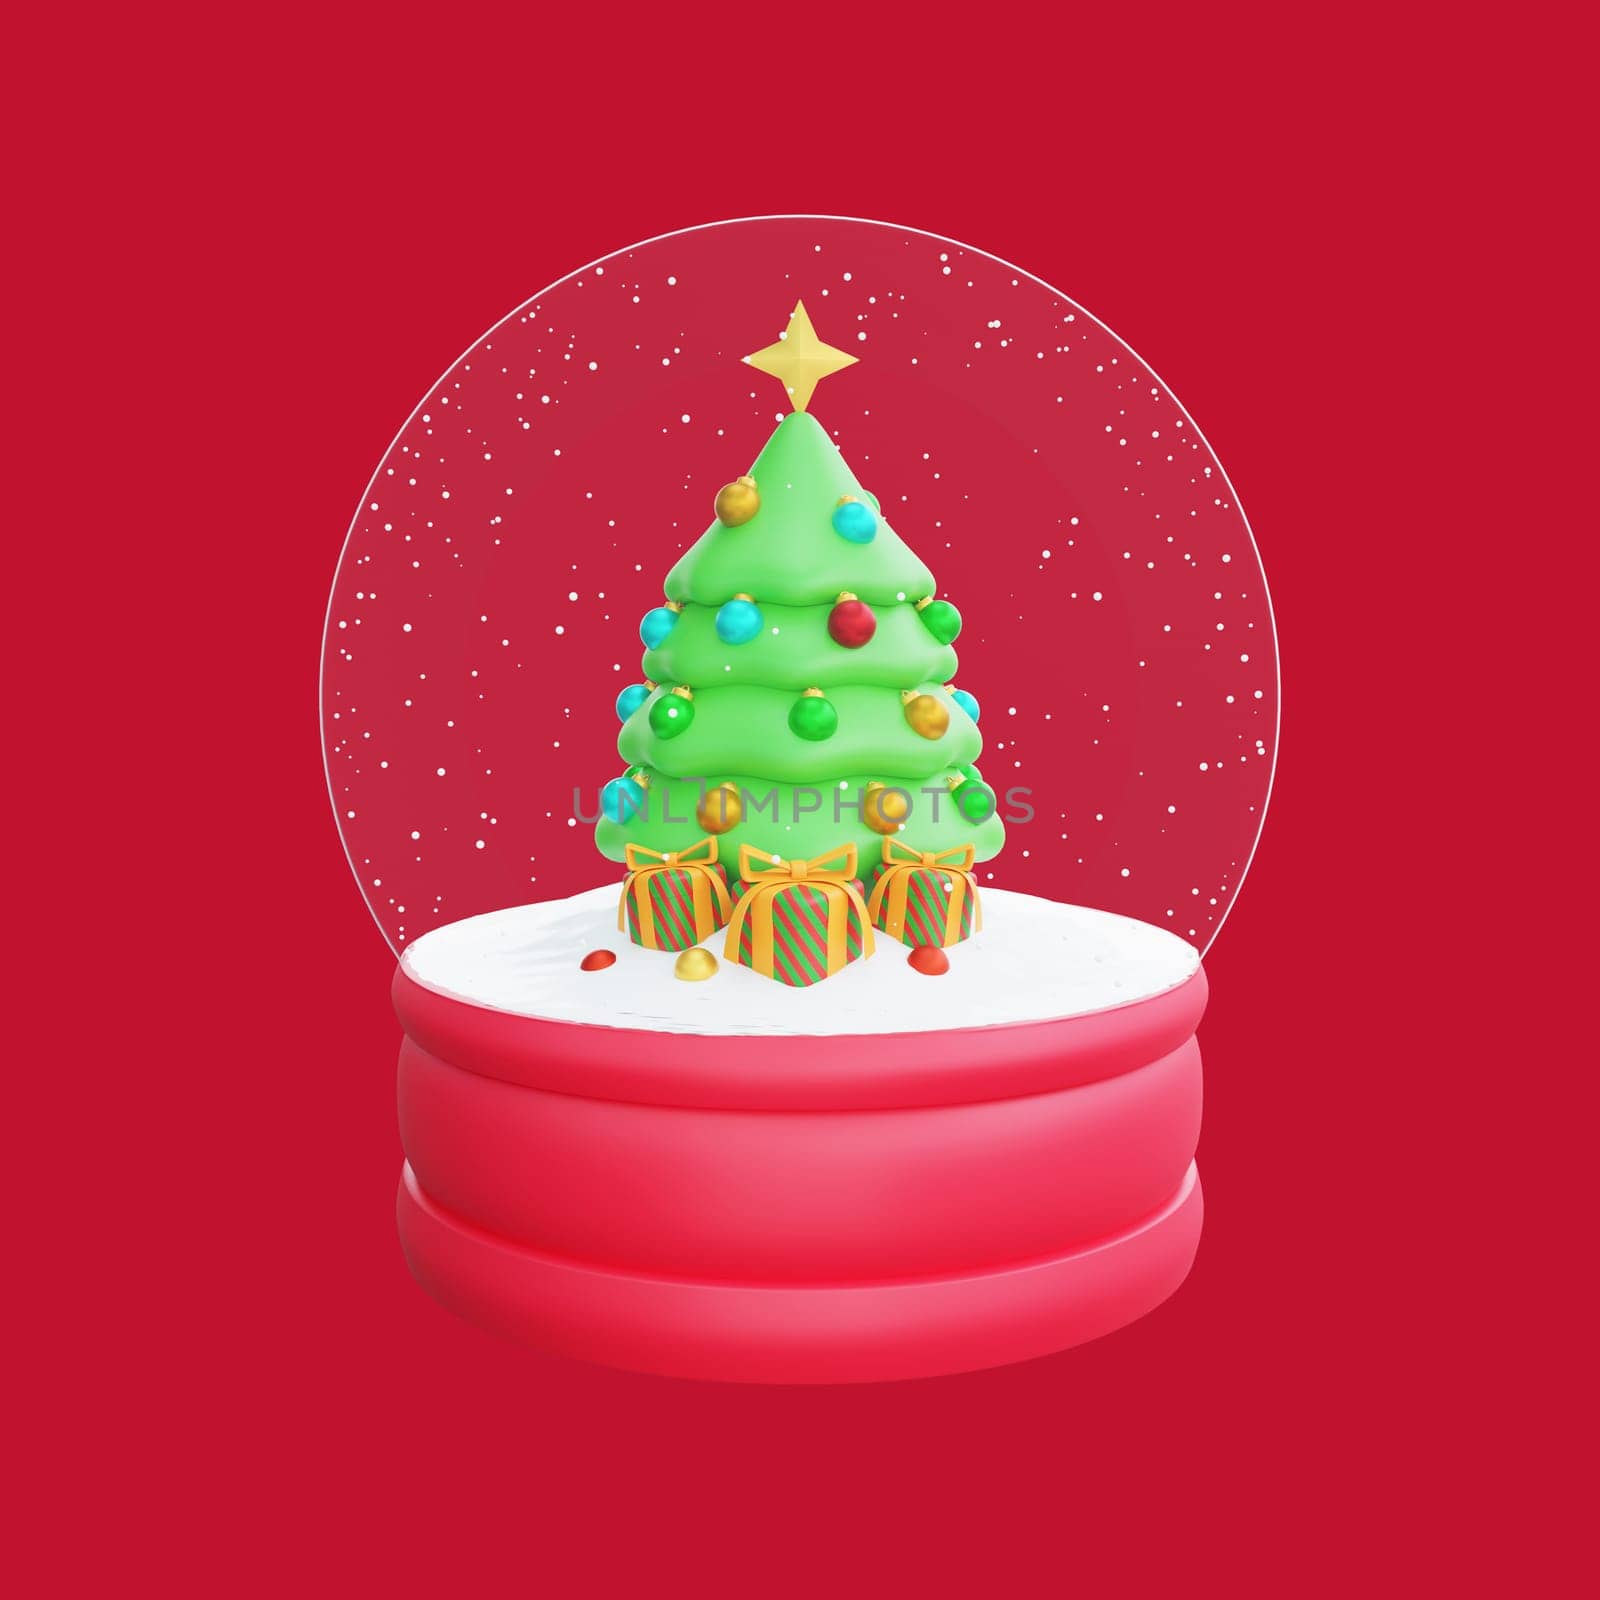 3D illustration of Christmas Snow Globe with Tree and Presents. Christmas decoration design by Rahmat_Djayusman